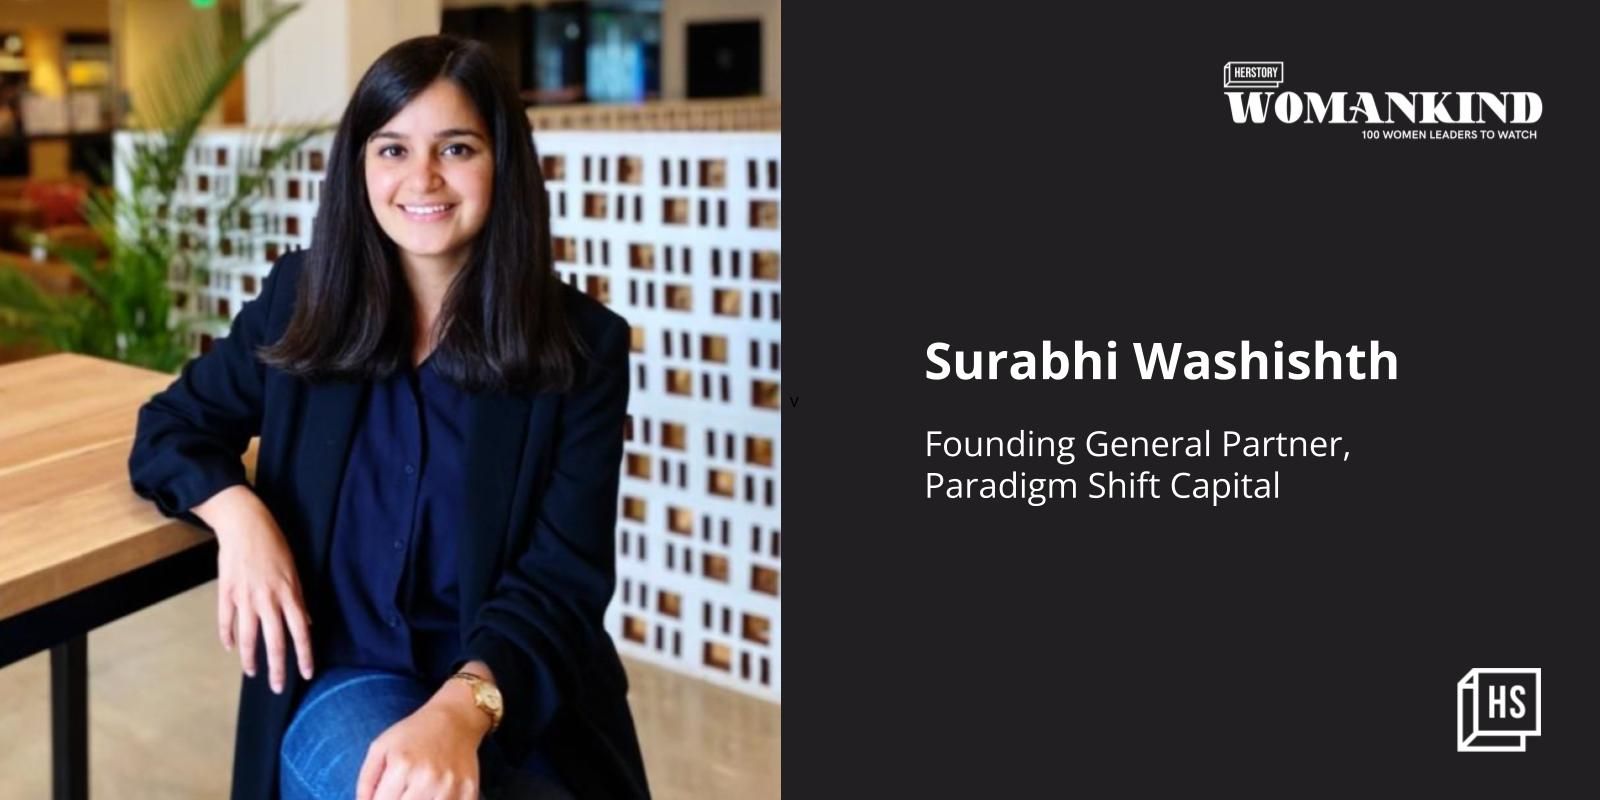 [100 Emerging Women Leaders] Meet Surabhi Washishth, the youngest woman general partner in India